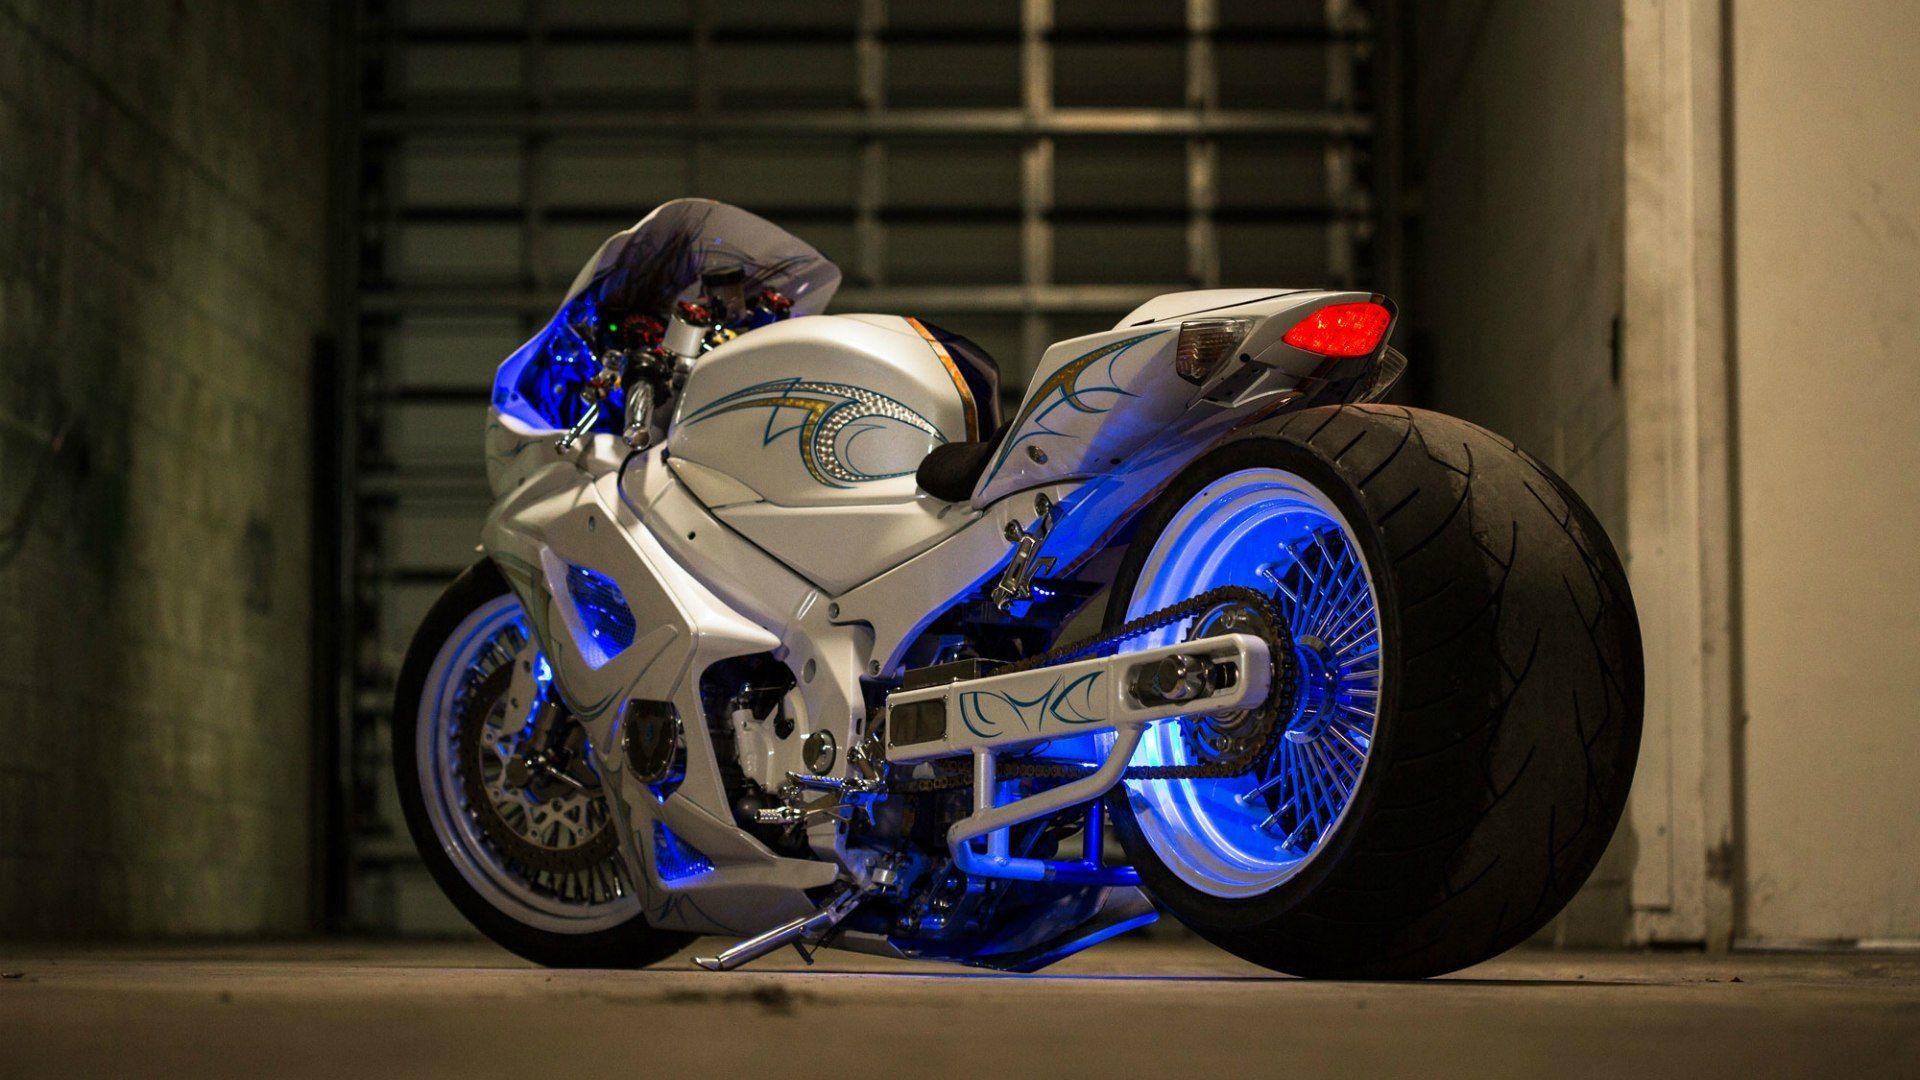 Racing Motorcycle Suzuki GSX R1000 Wallpaper And Image